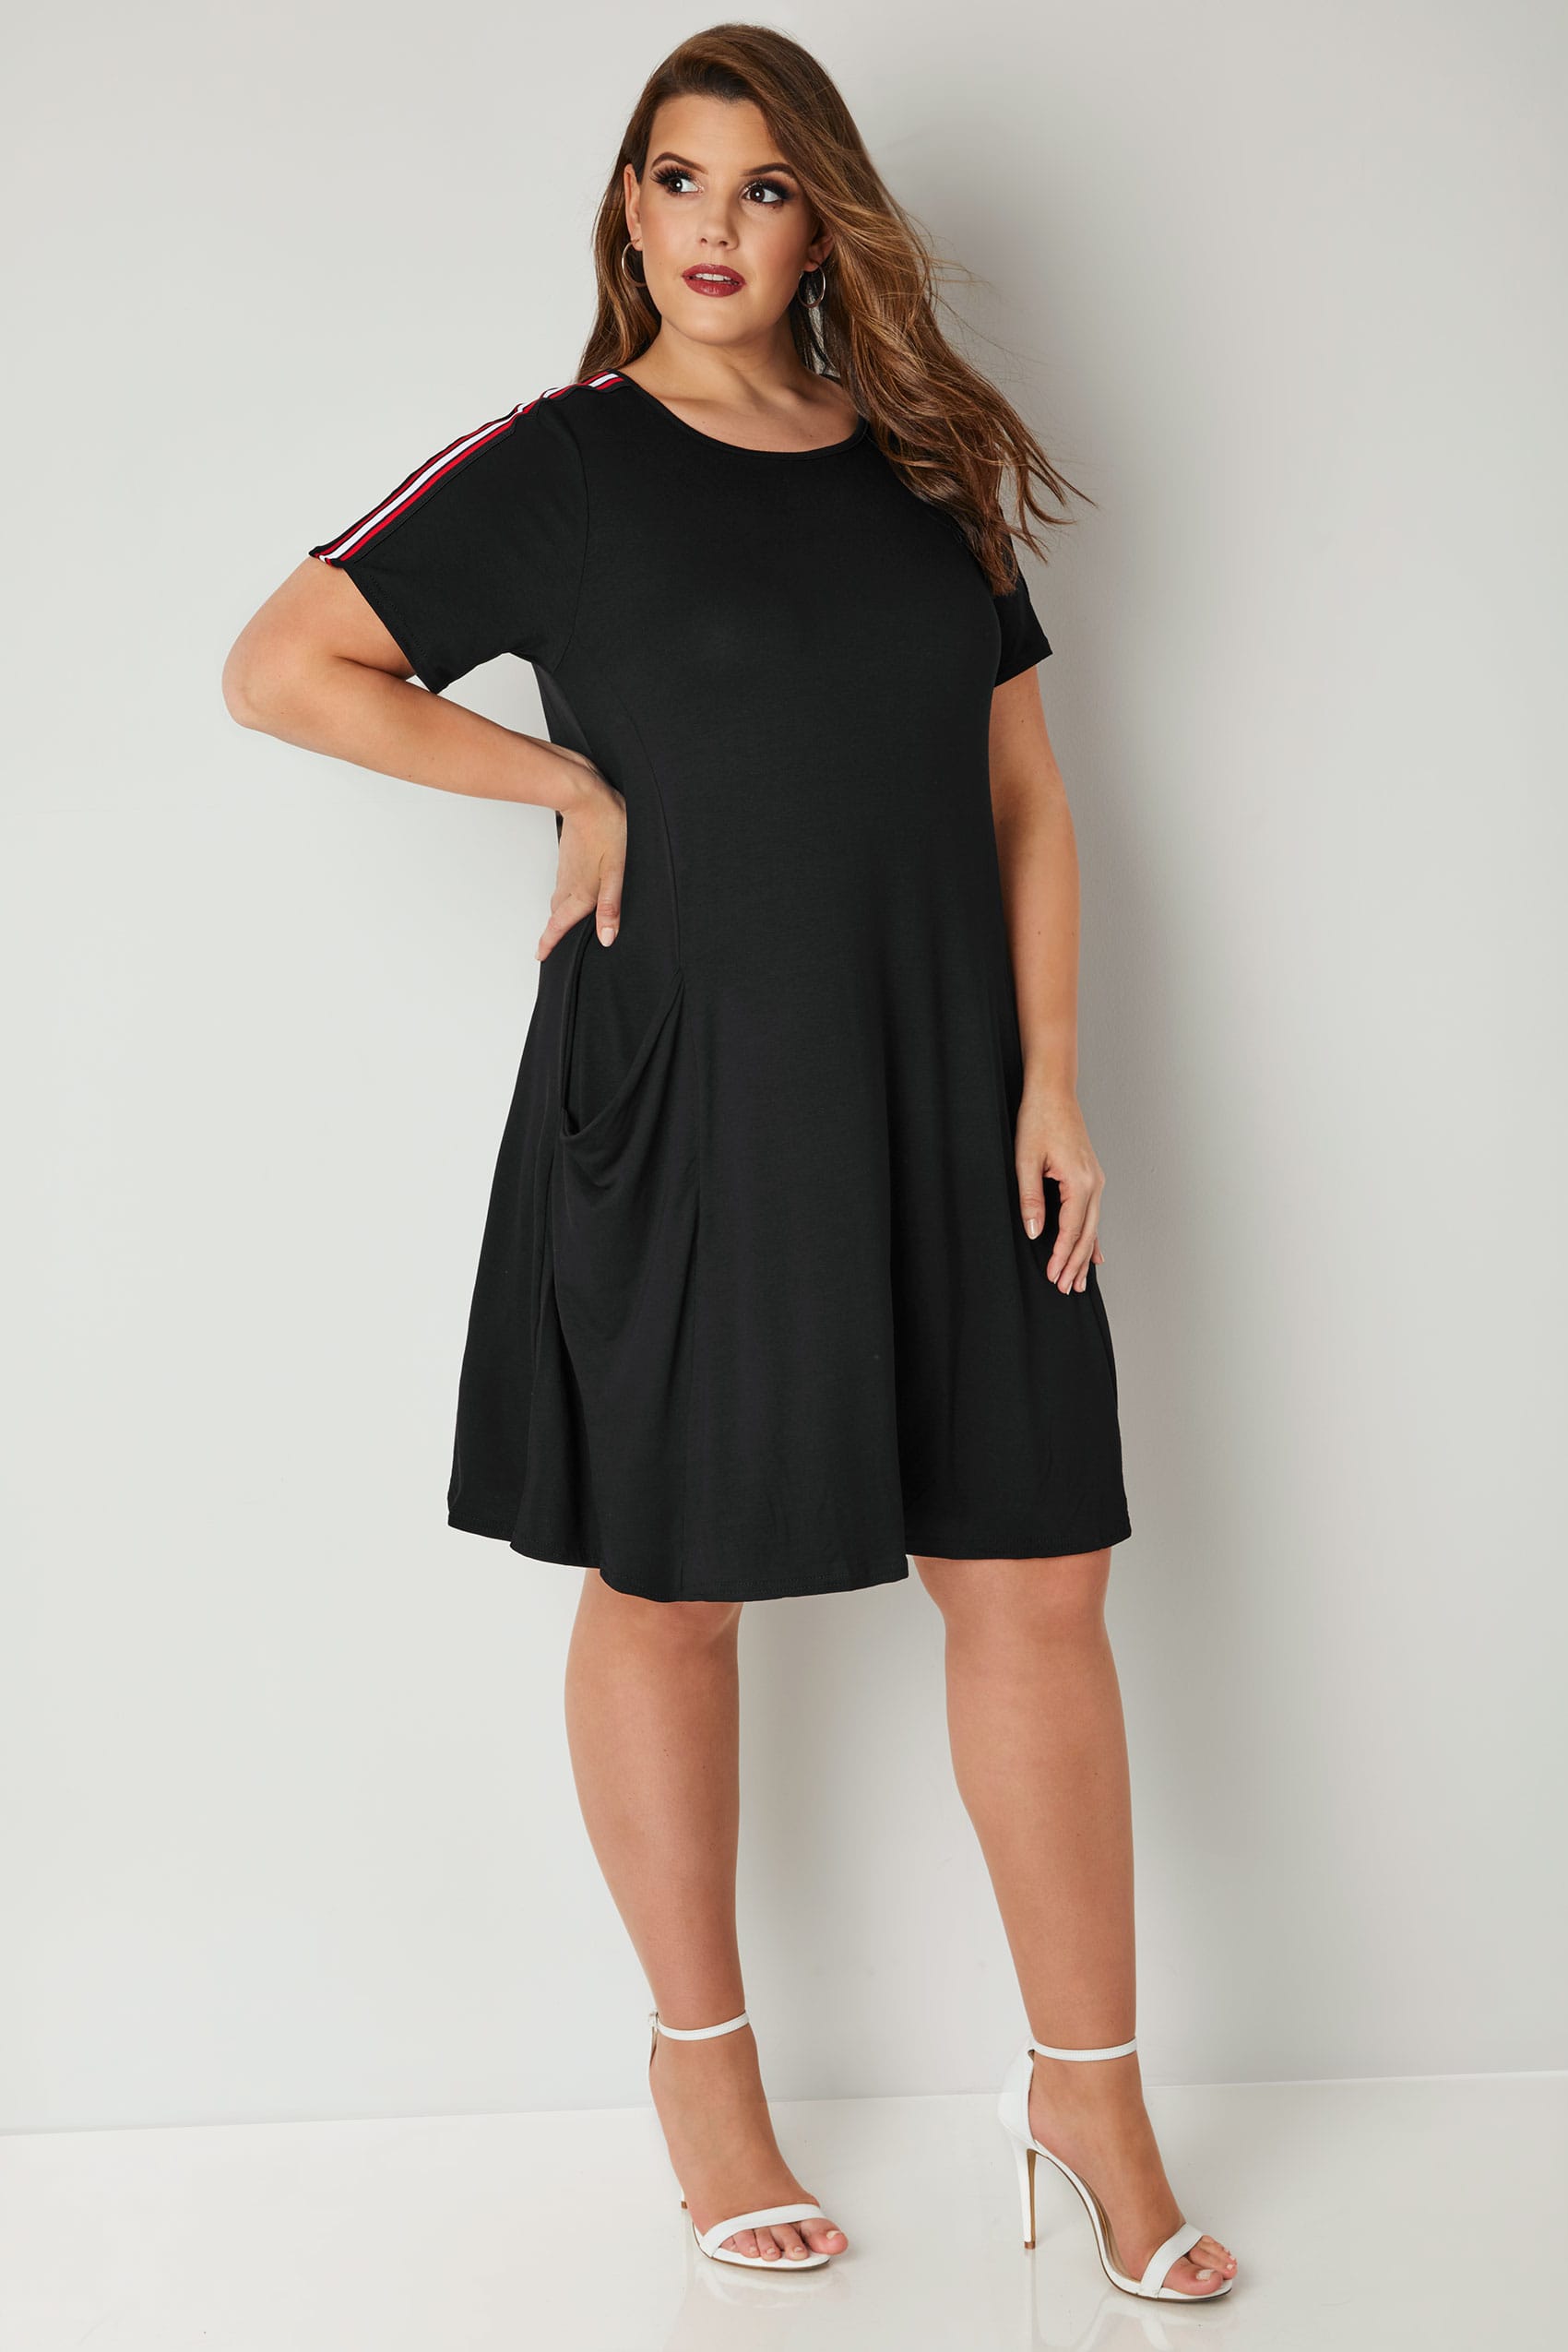 Black Jersey Pocket Dress With Stripe Shoulders Plus Size 16 To 36